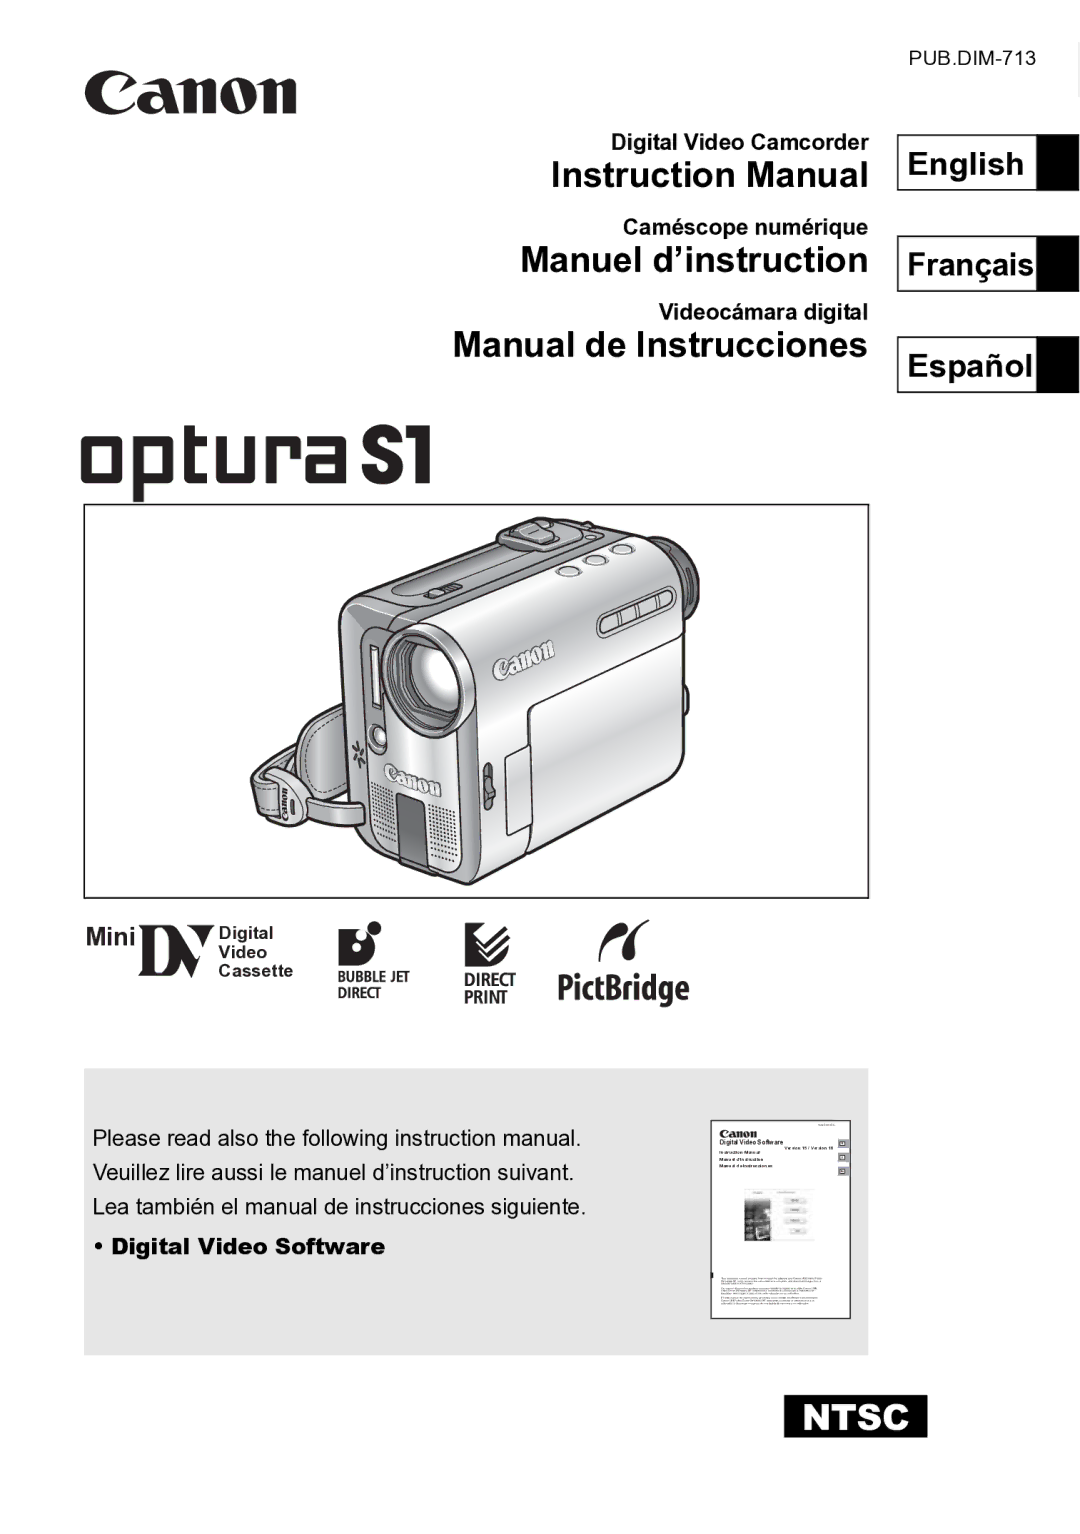 Canon S1 instruction manual English Français Español, Digital Video Camcorder Caméscope numérique, Videocámara digital 